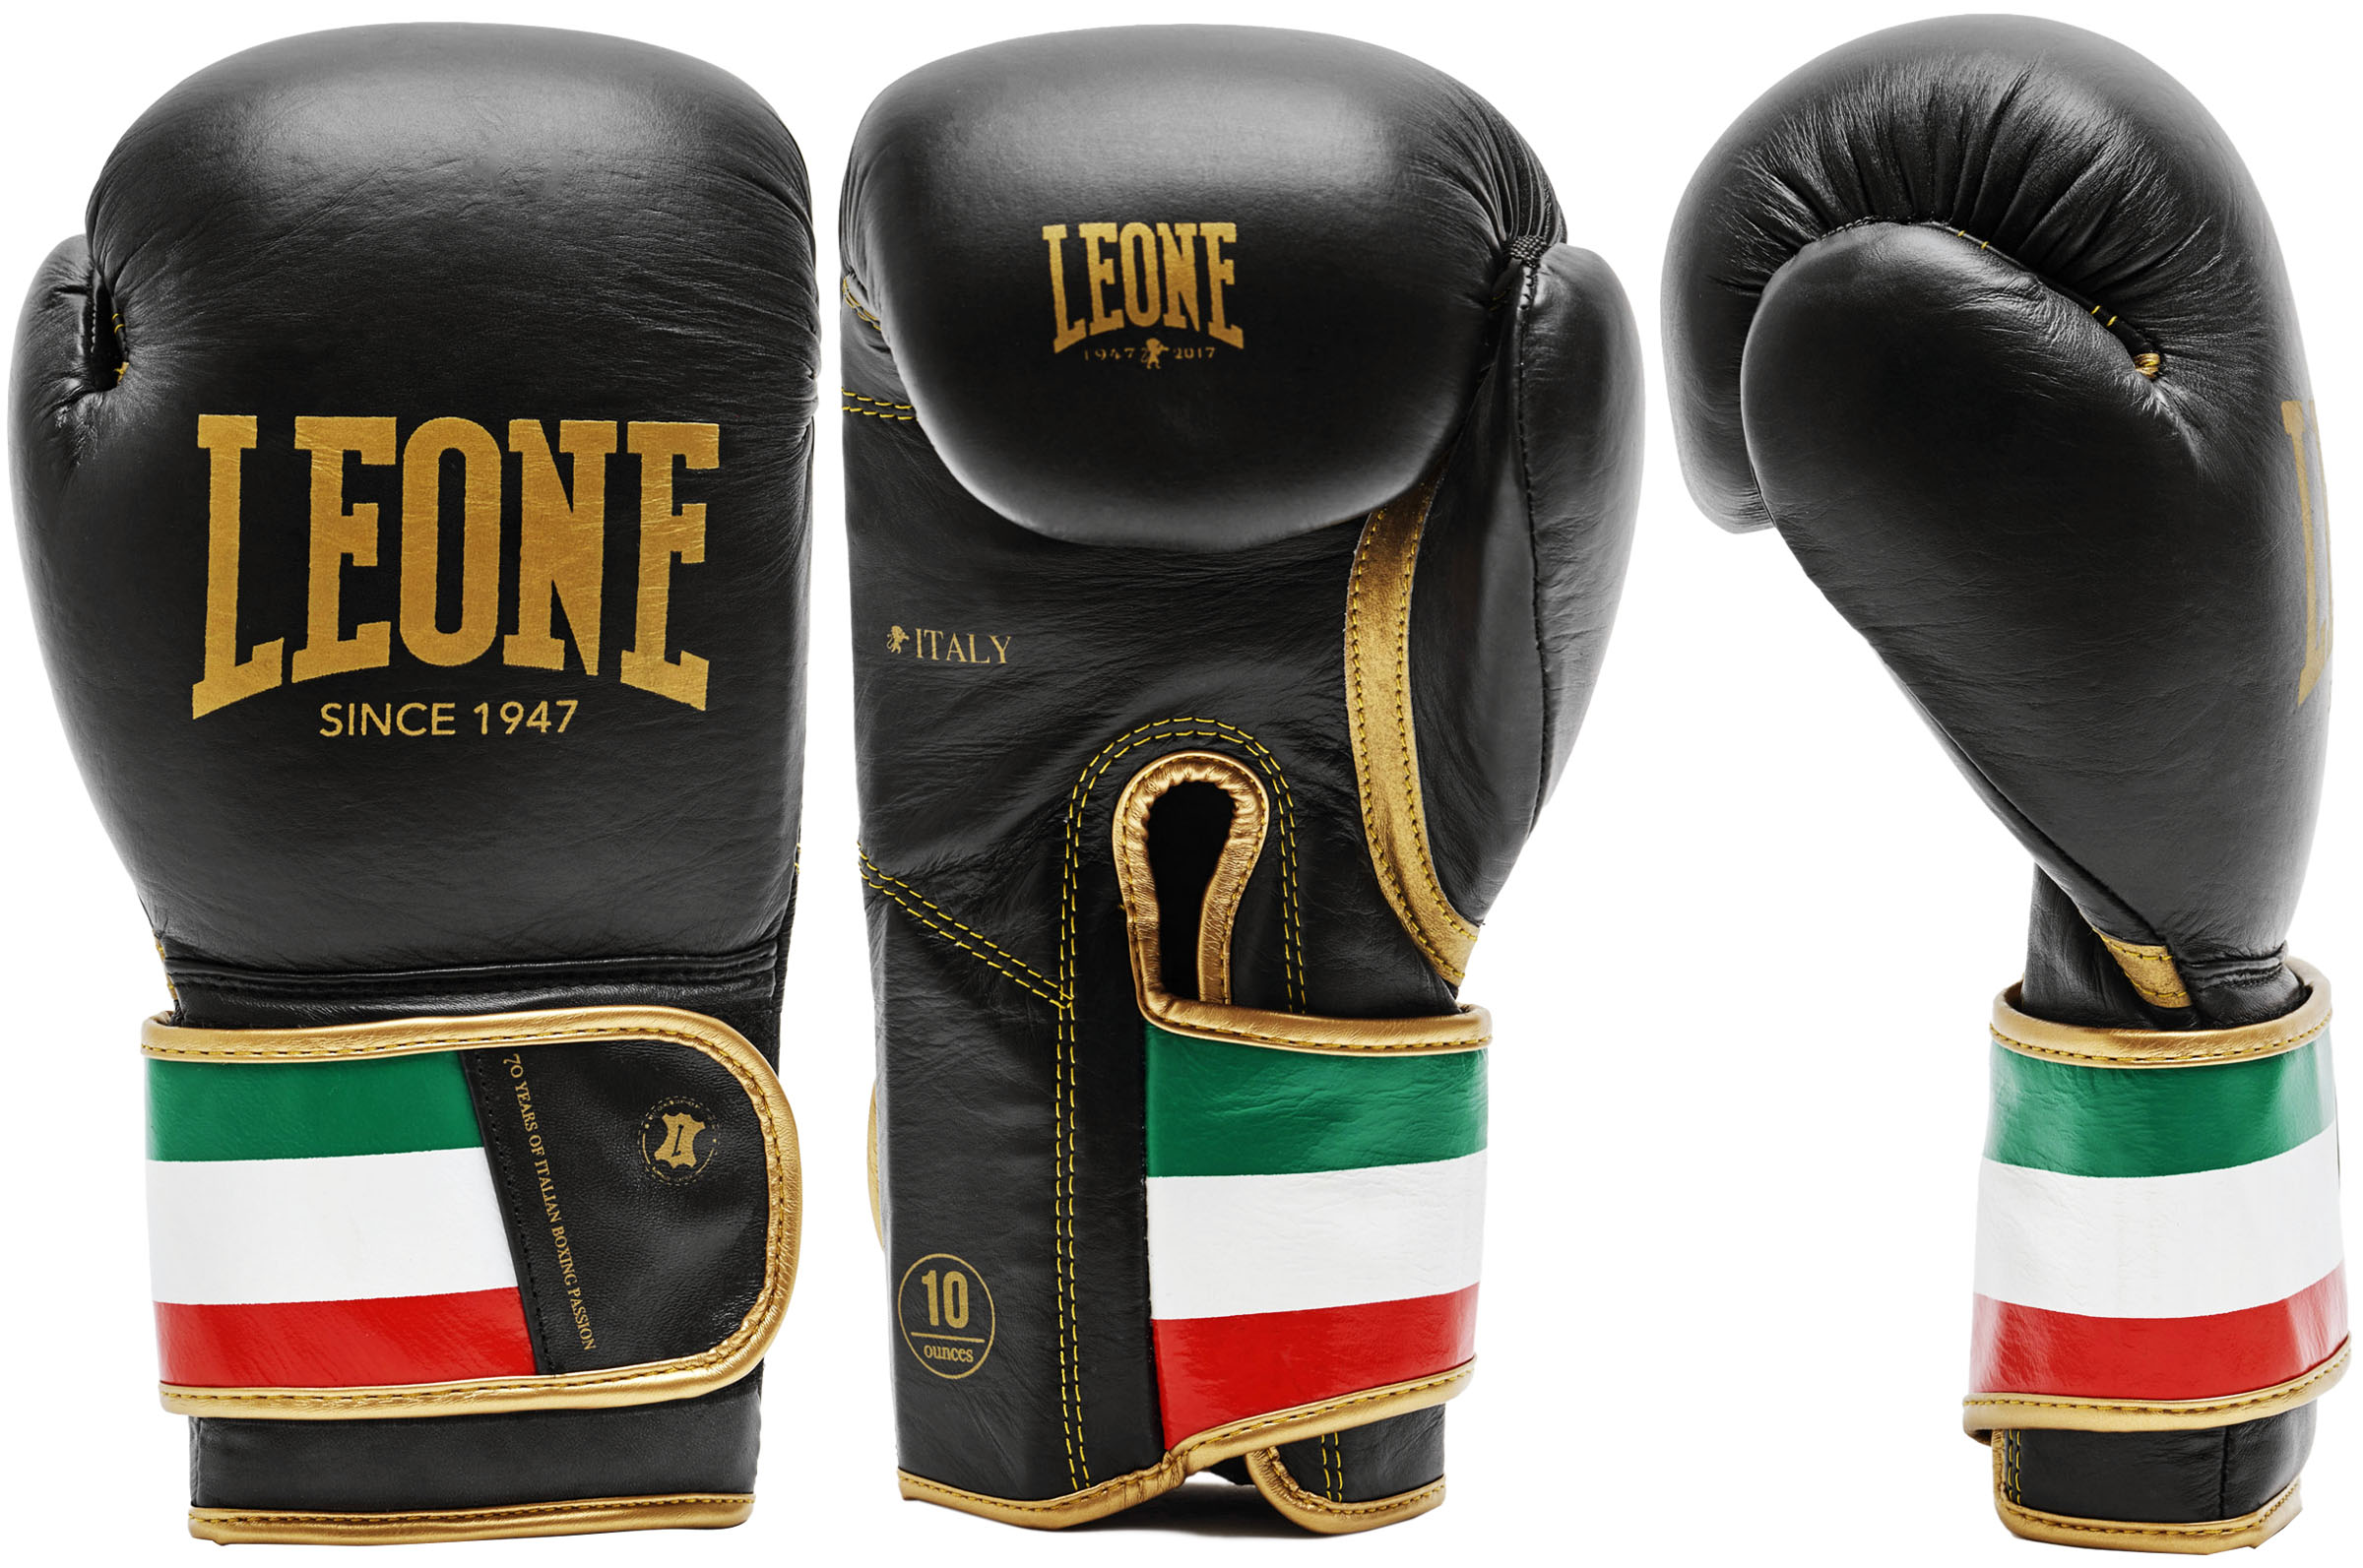 Boxing gloves, Buffalo leather - Italy 47, Leone 